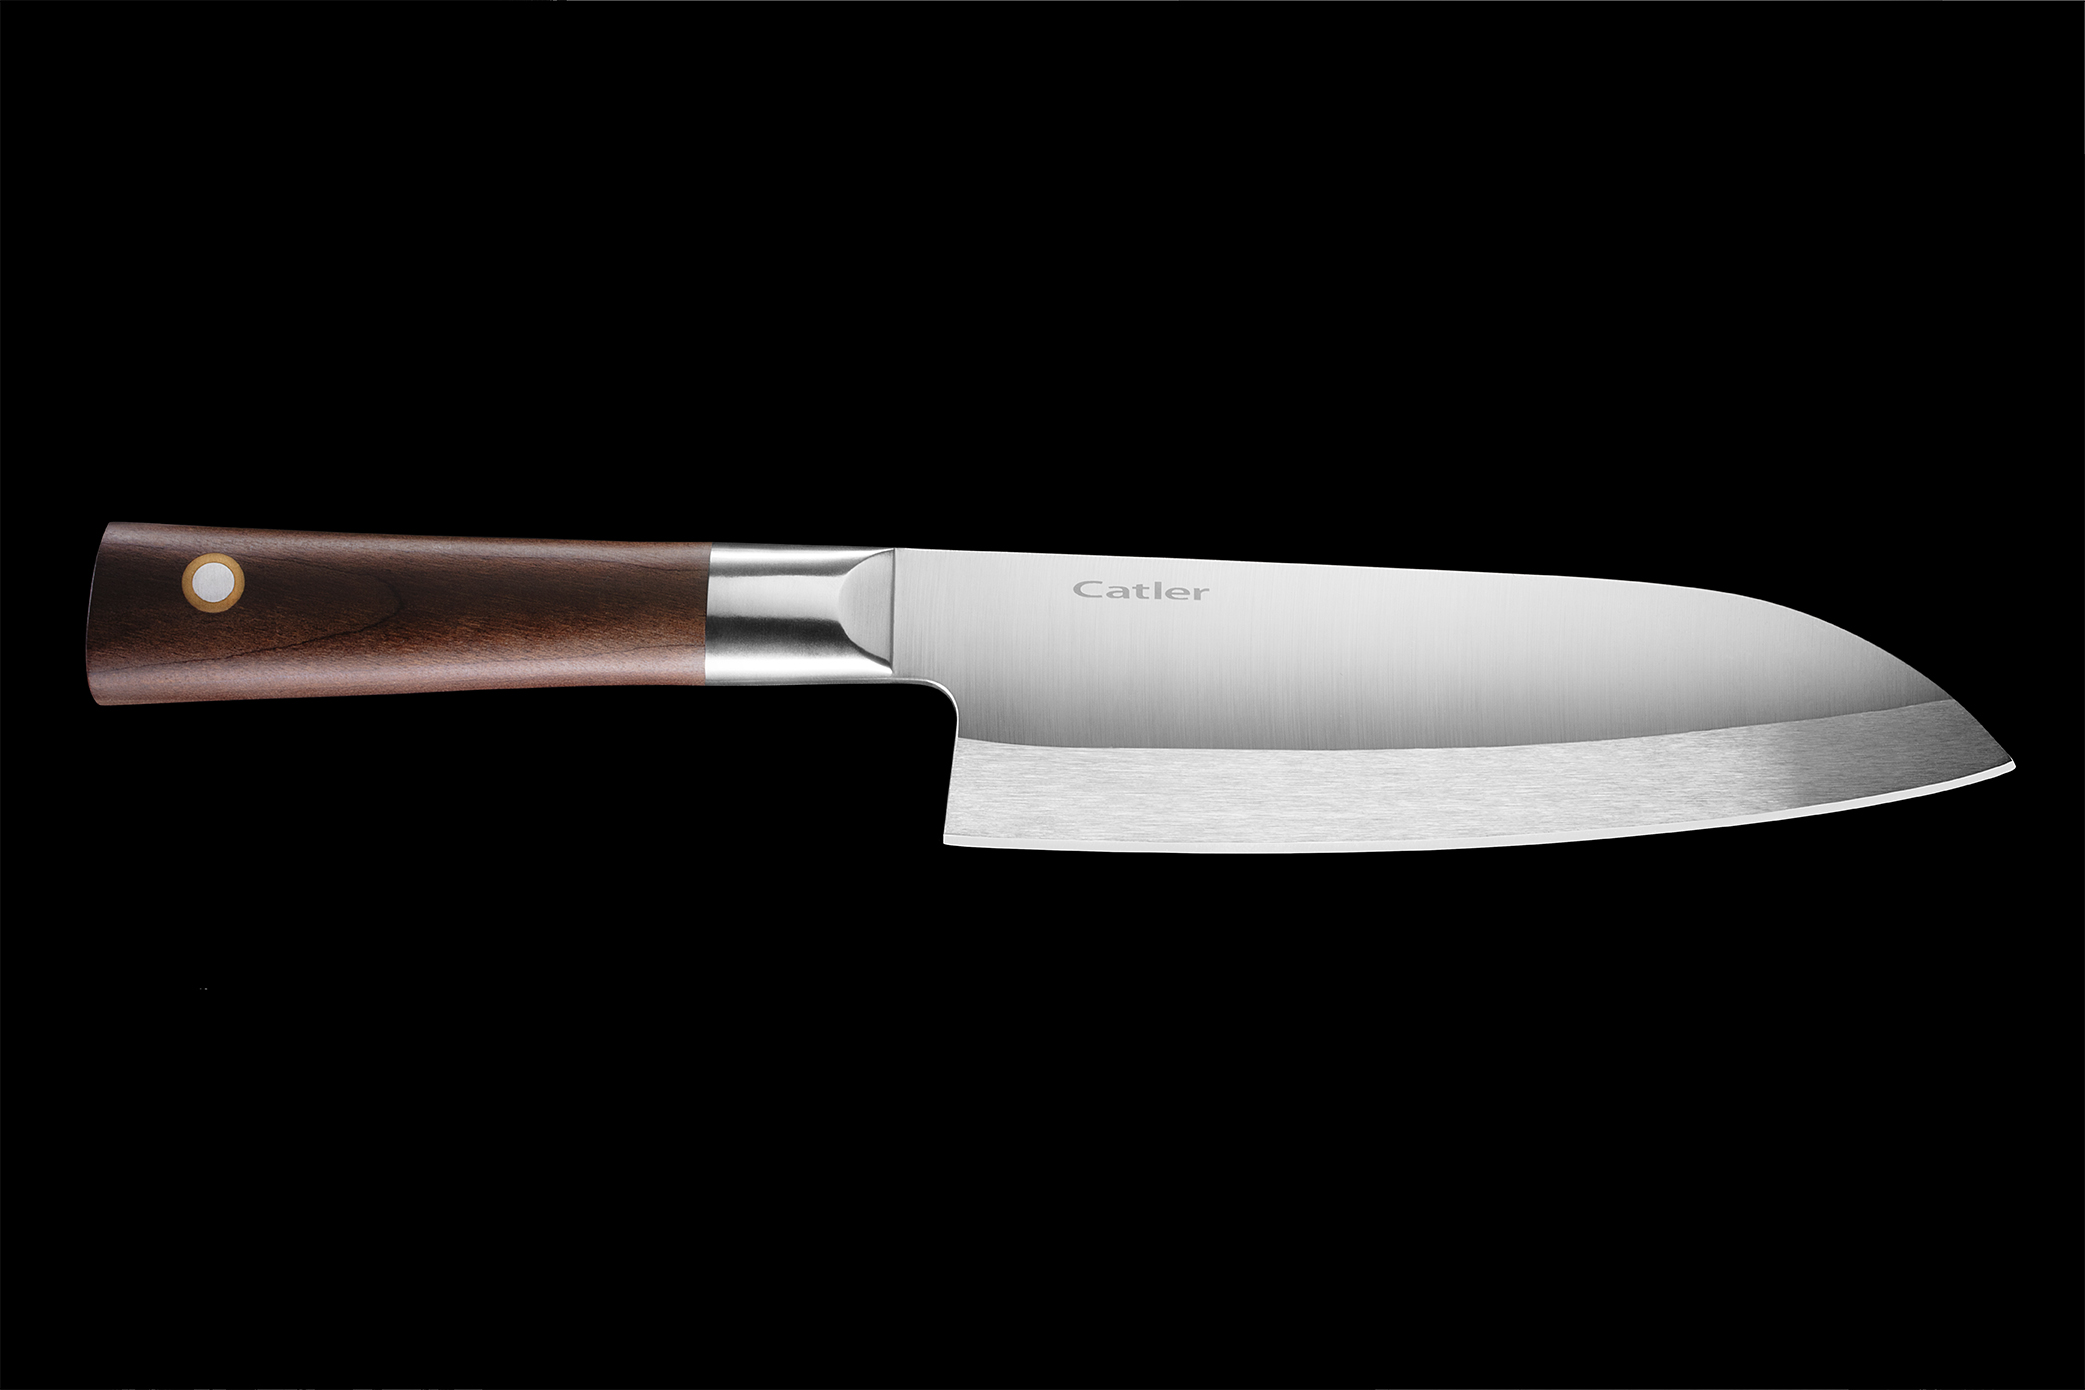 The Japanese Deba knife 